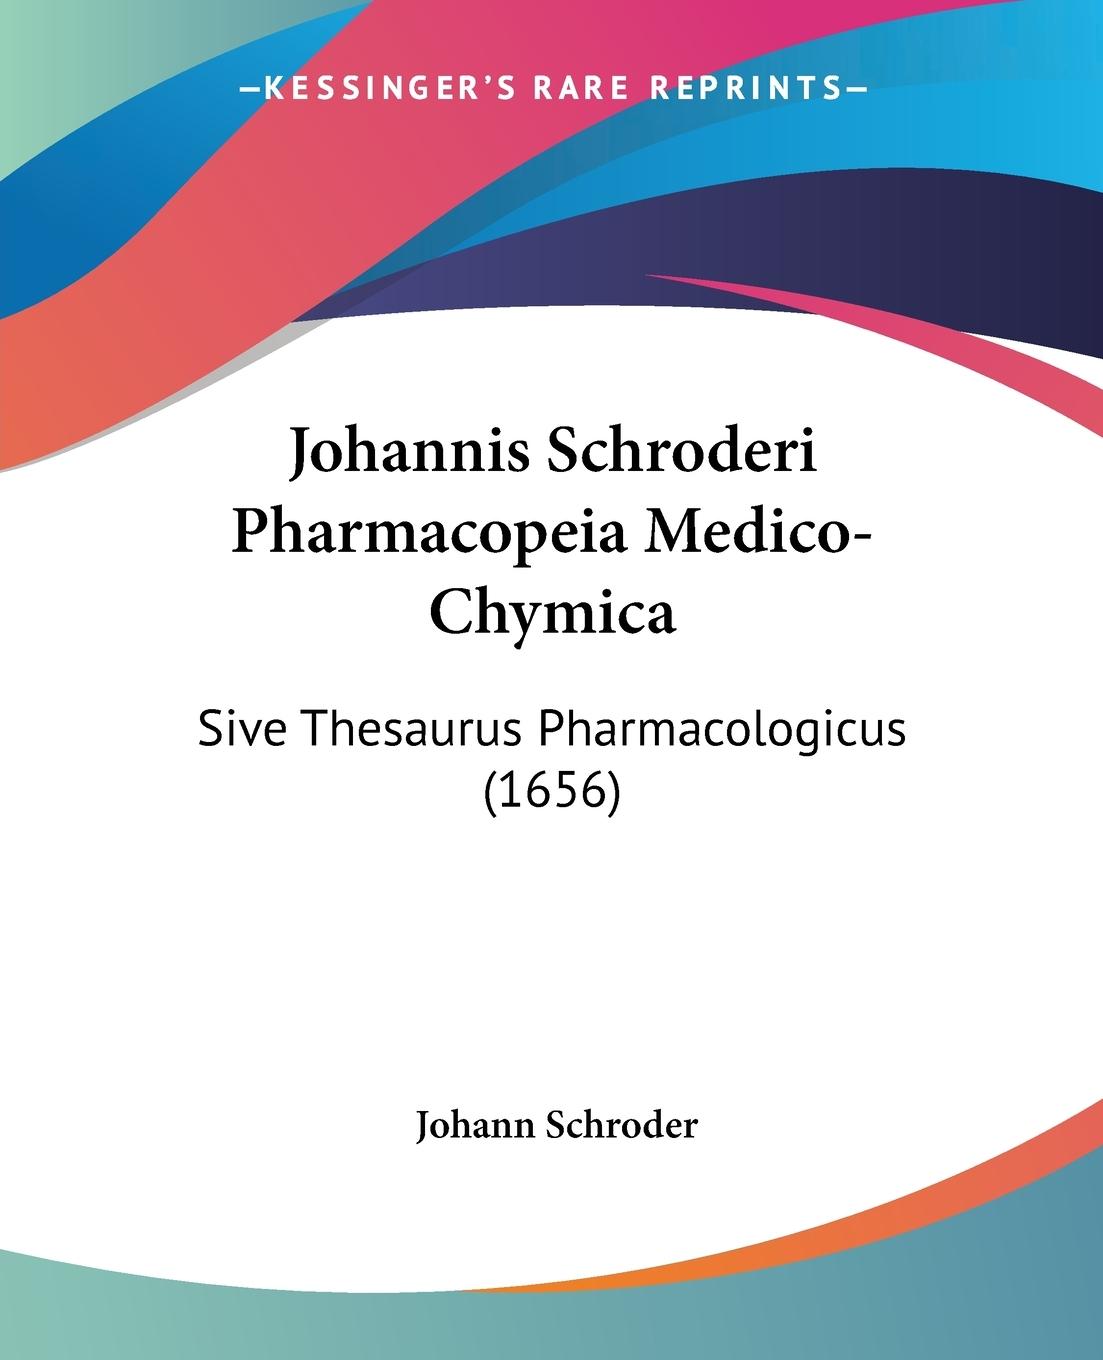 Johannis Schroderi Pharmacopeia Medico-Chymica - Schroder, Johann